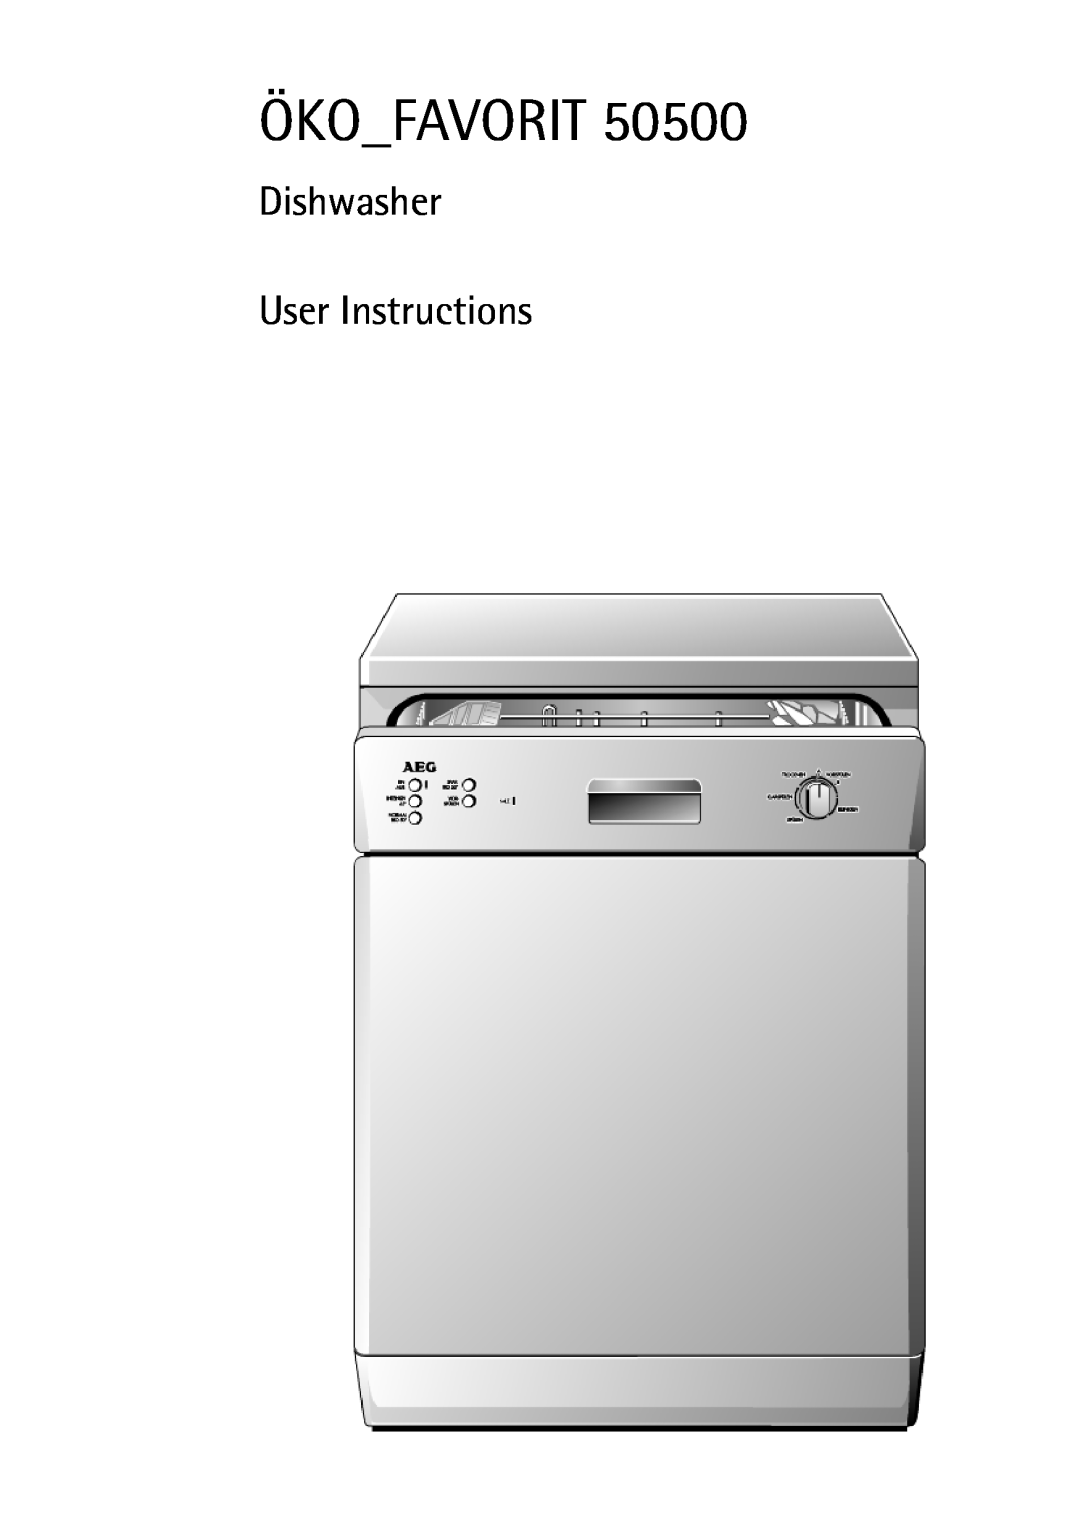 Electrolux 50500 manual Ökofavorit, Dishwasher User Instructions 